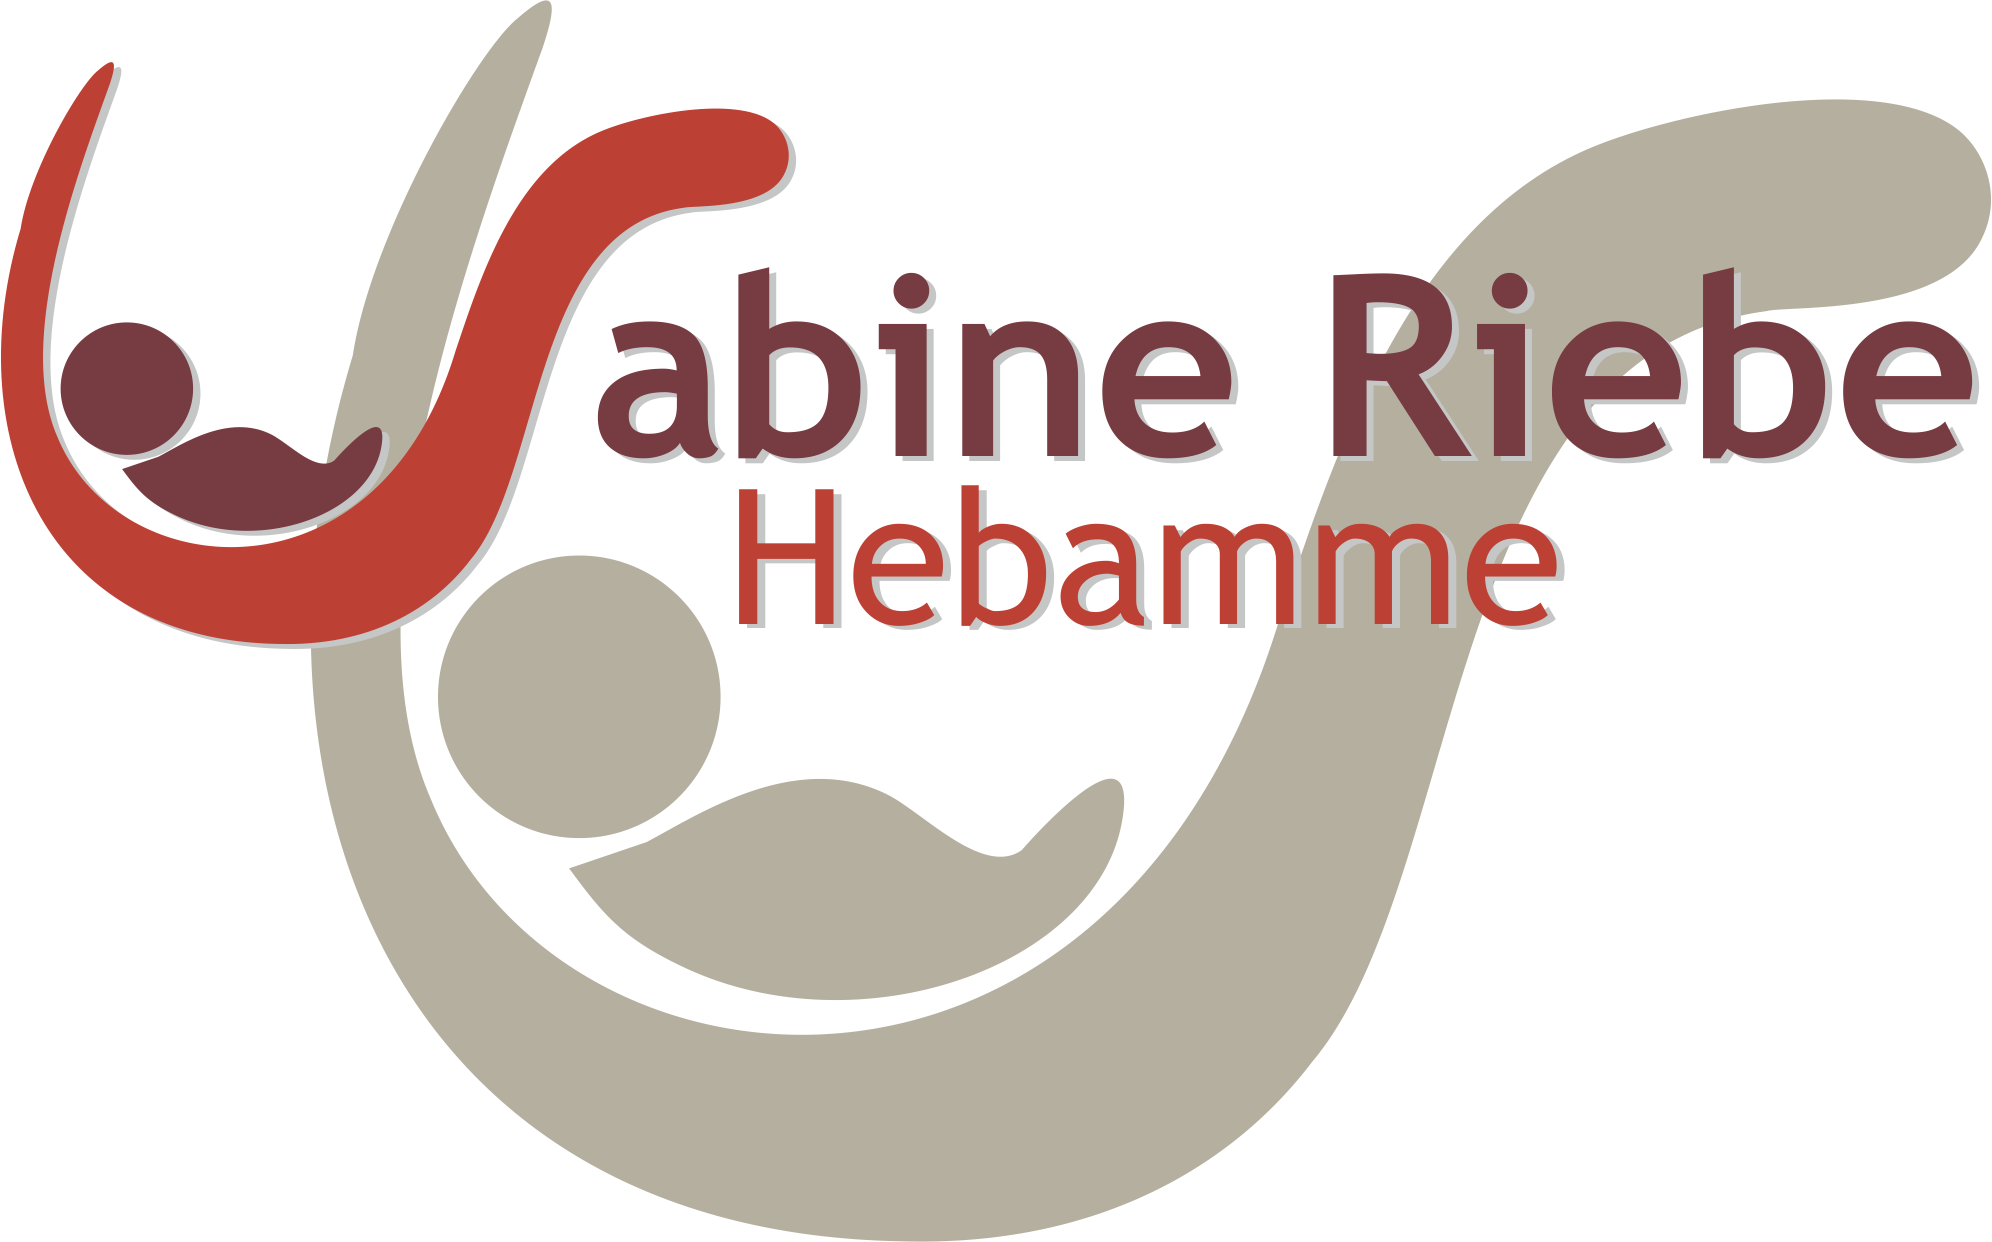 Hebamme Sabine Riebe - Hebamme, Transparent background PNG HD thumbnail